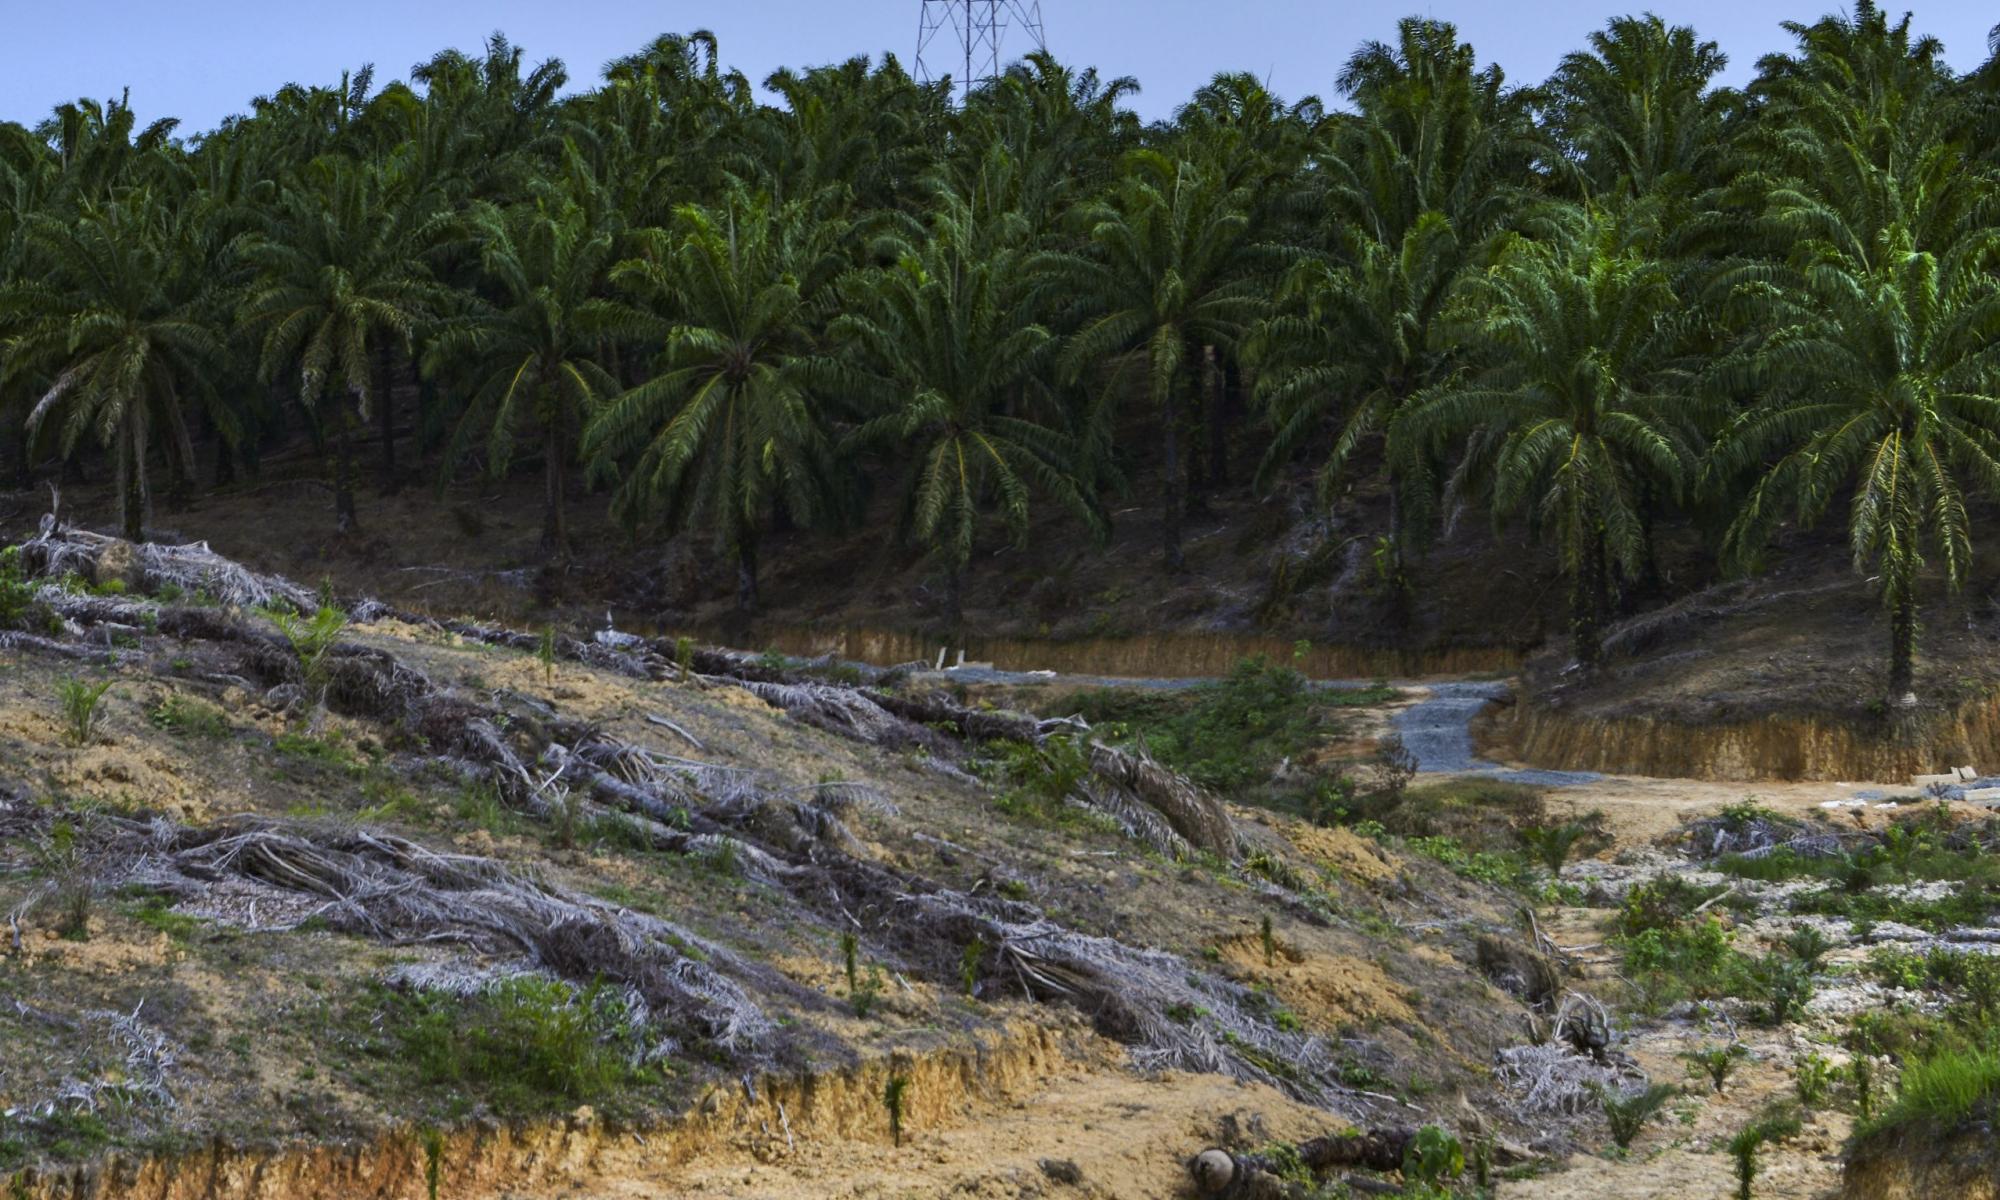 Biggest food brands 'failing goals to banish palm oil deforestation'